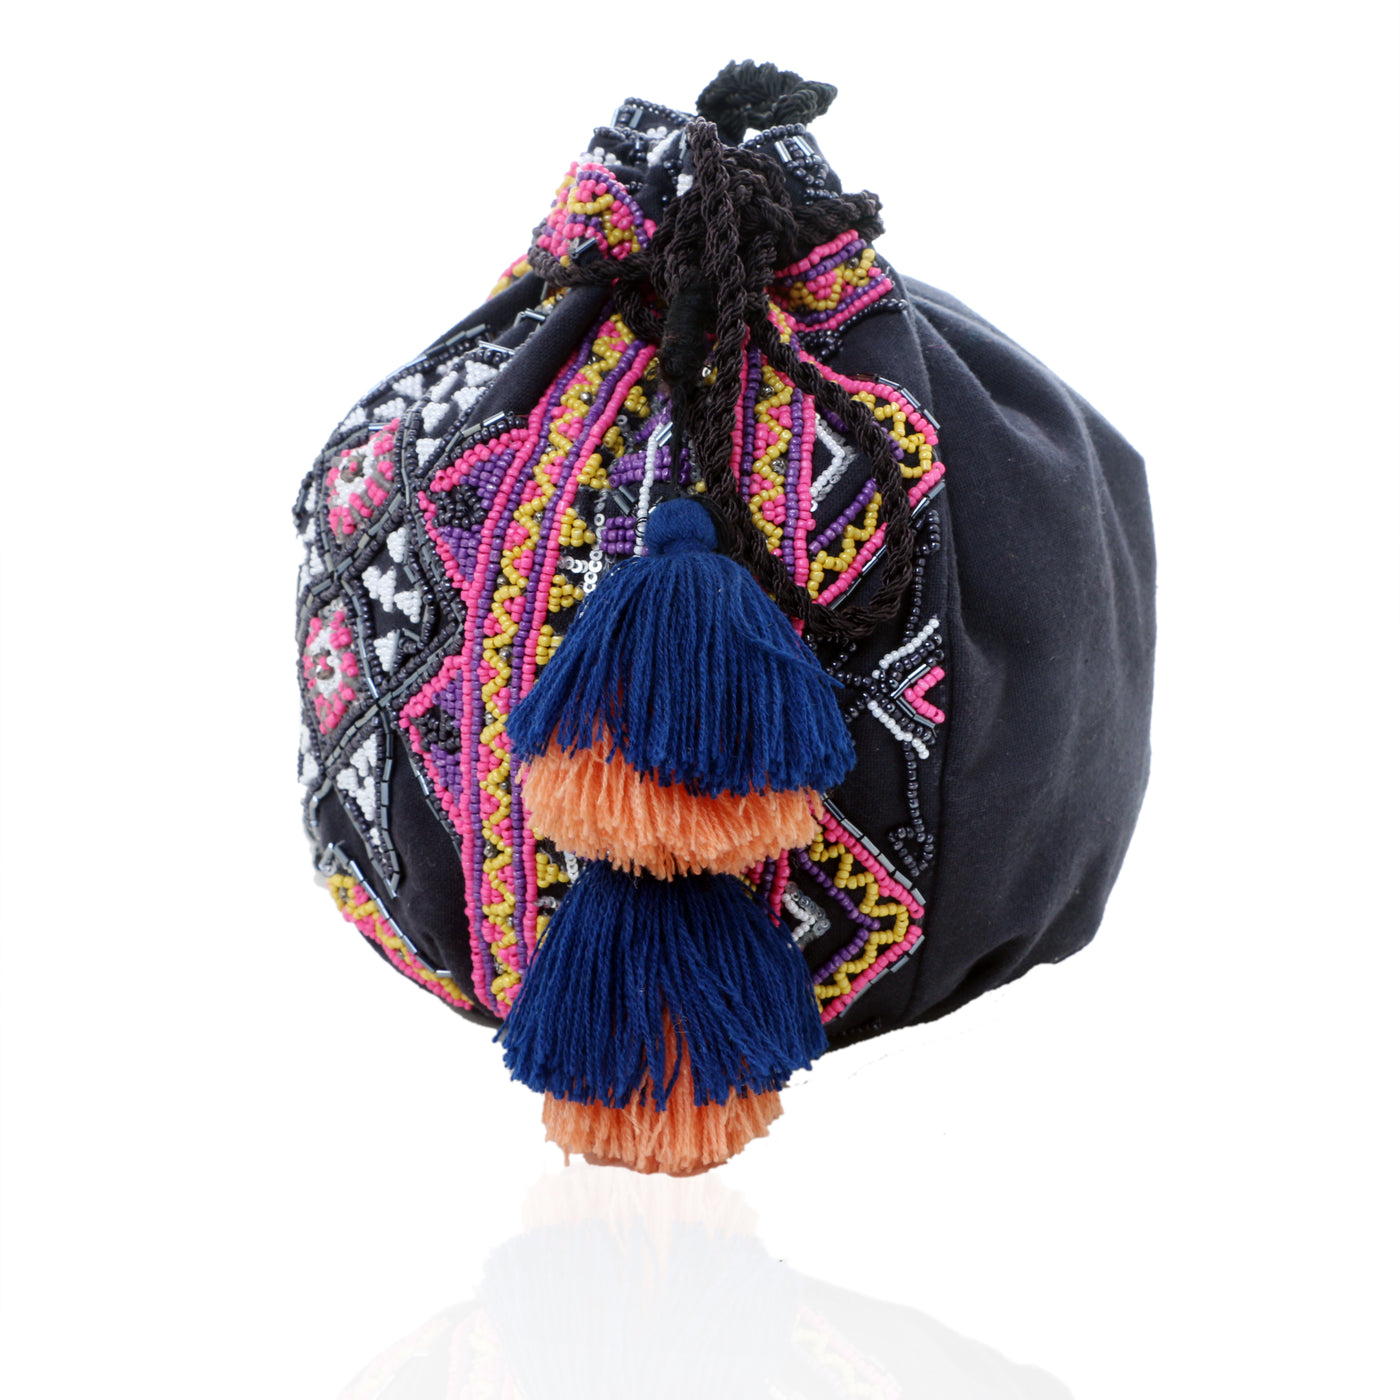 Hand Embellished Bohemian Potli Bag